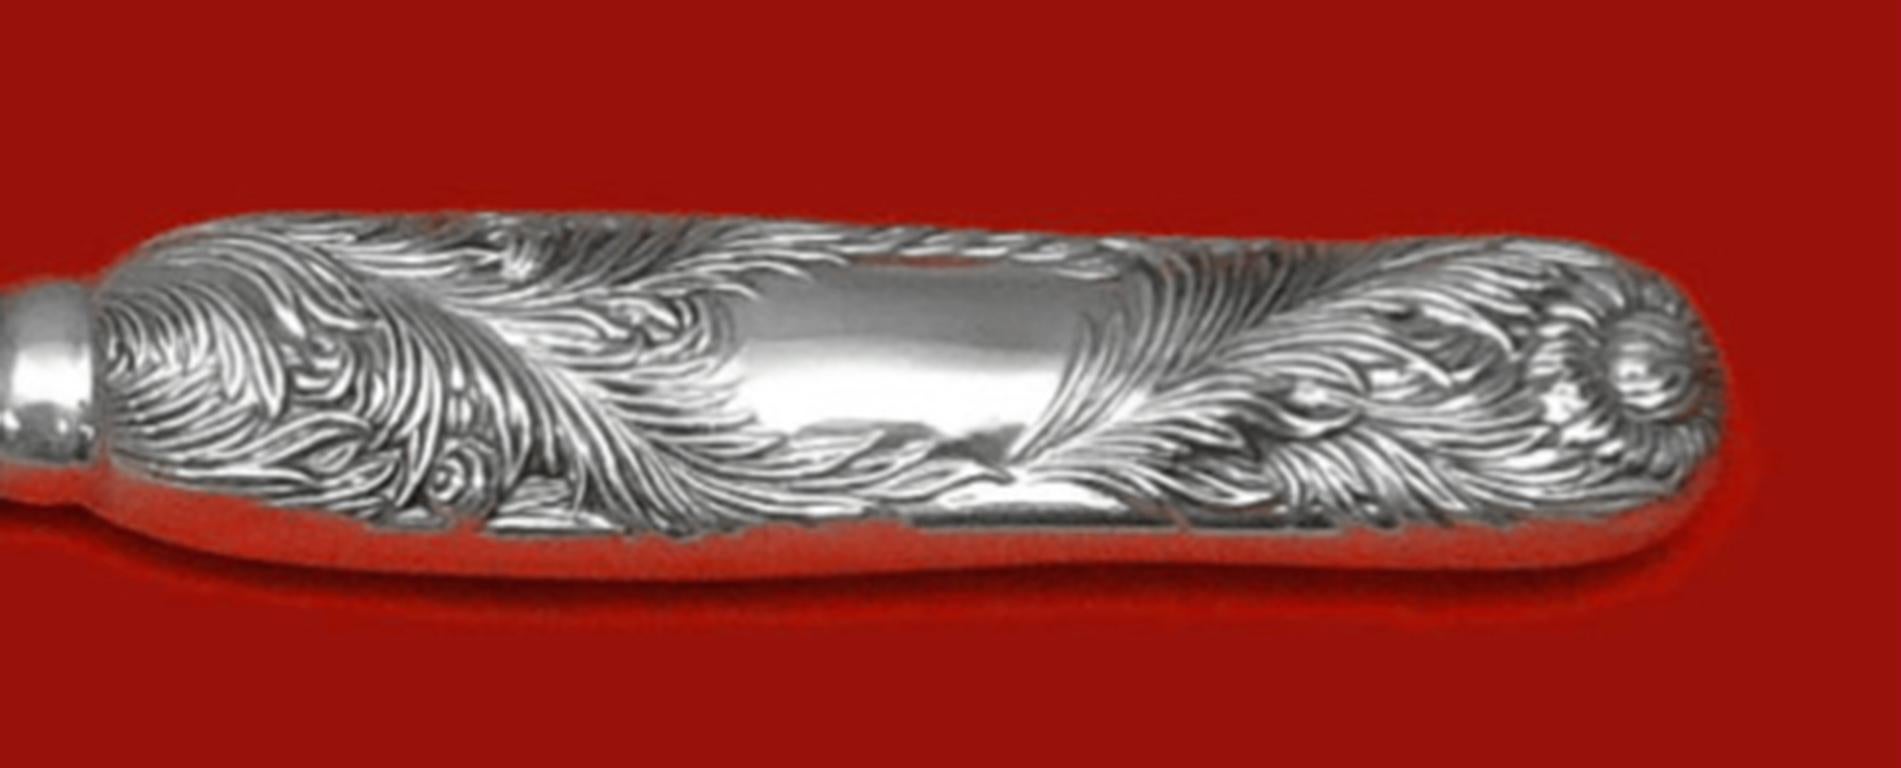 Sterling silver hollow handle all sterling breakfast Knife blunt blade, 7 1/2